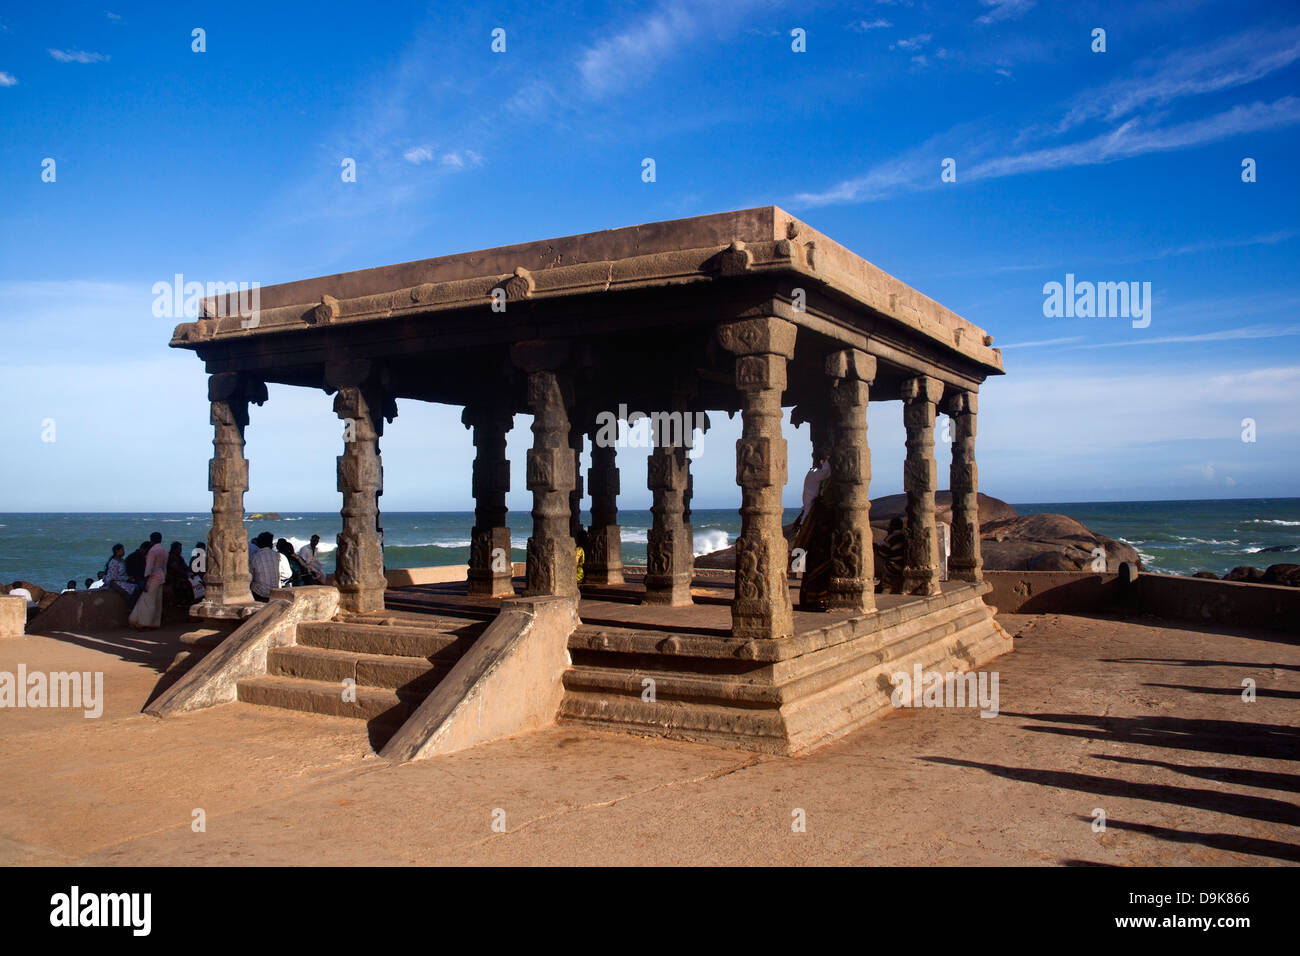 Pavilion sur la côte, Vivekananda Memorial Rock, Kanyakumari, Tamil Nadu, Inde Banque D'Images